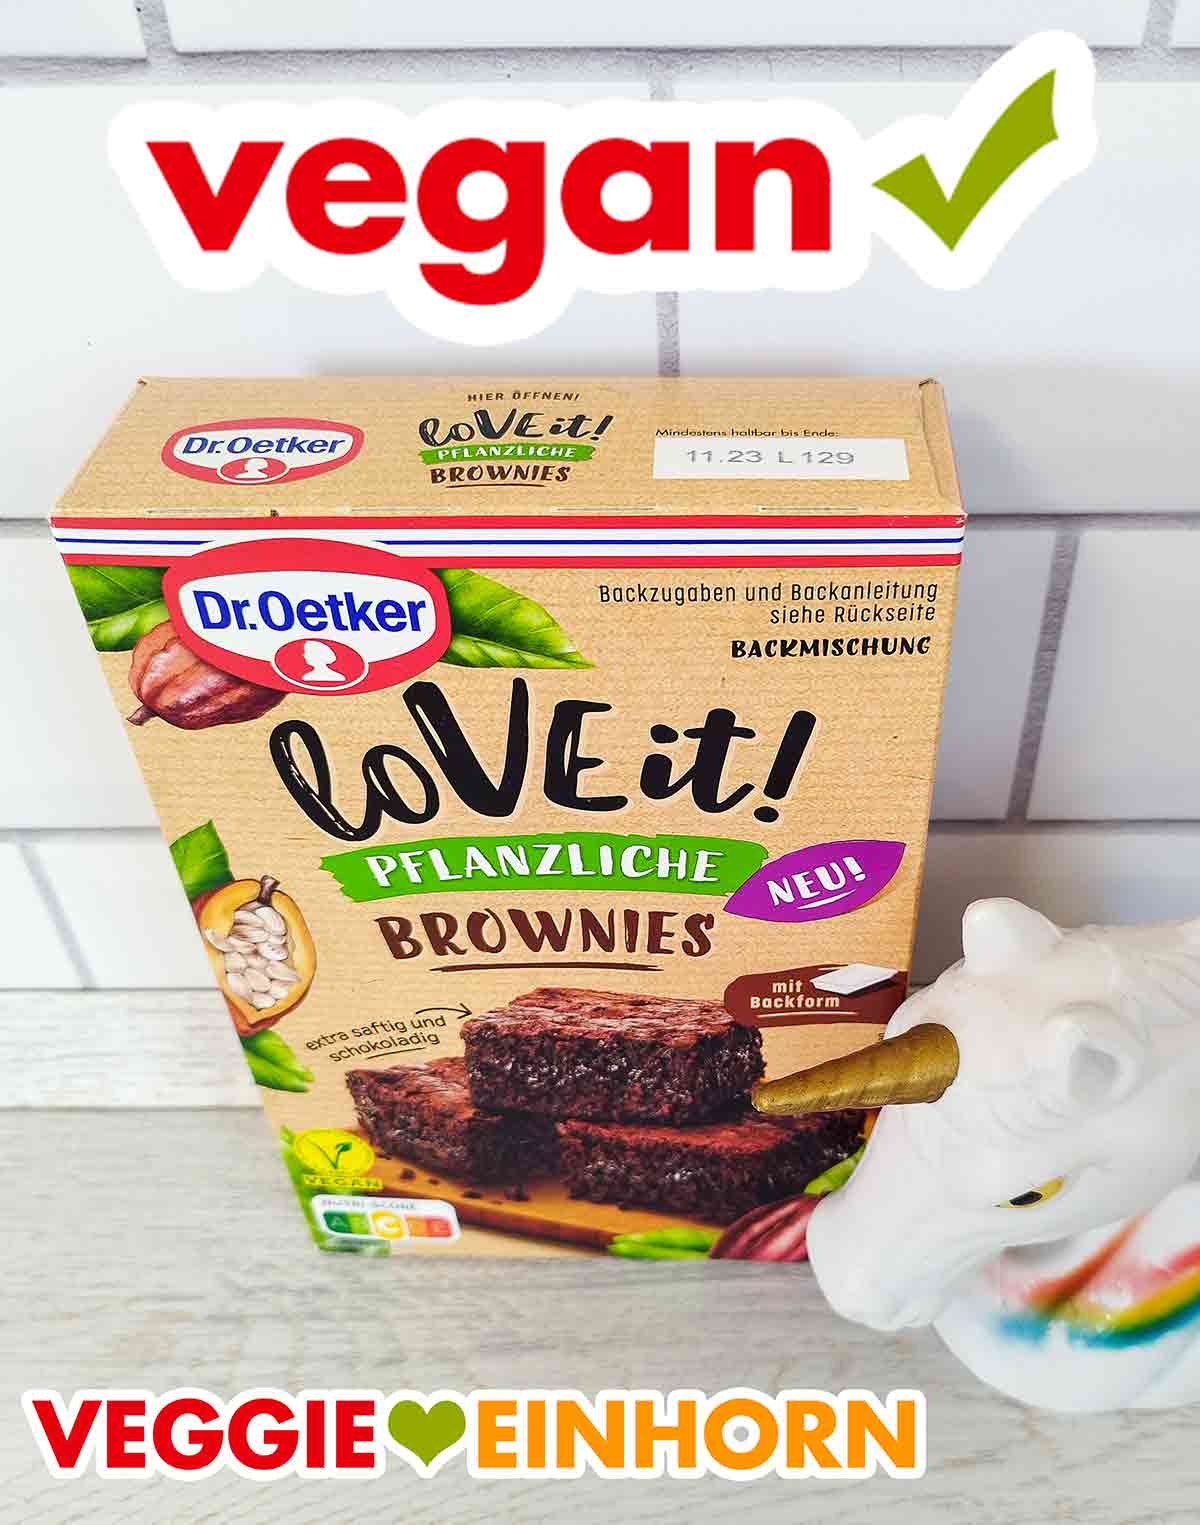 Verpackung der veganen Brownies Backmischung von Dr. Oetker LoVE it!